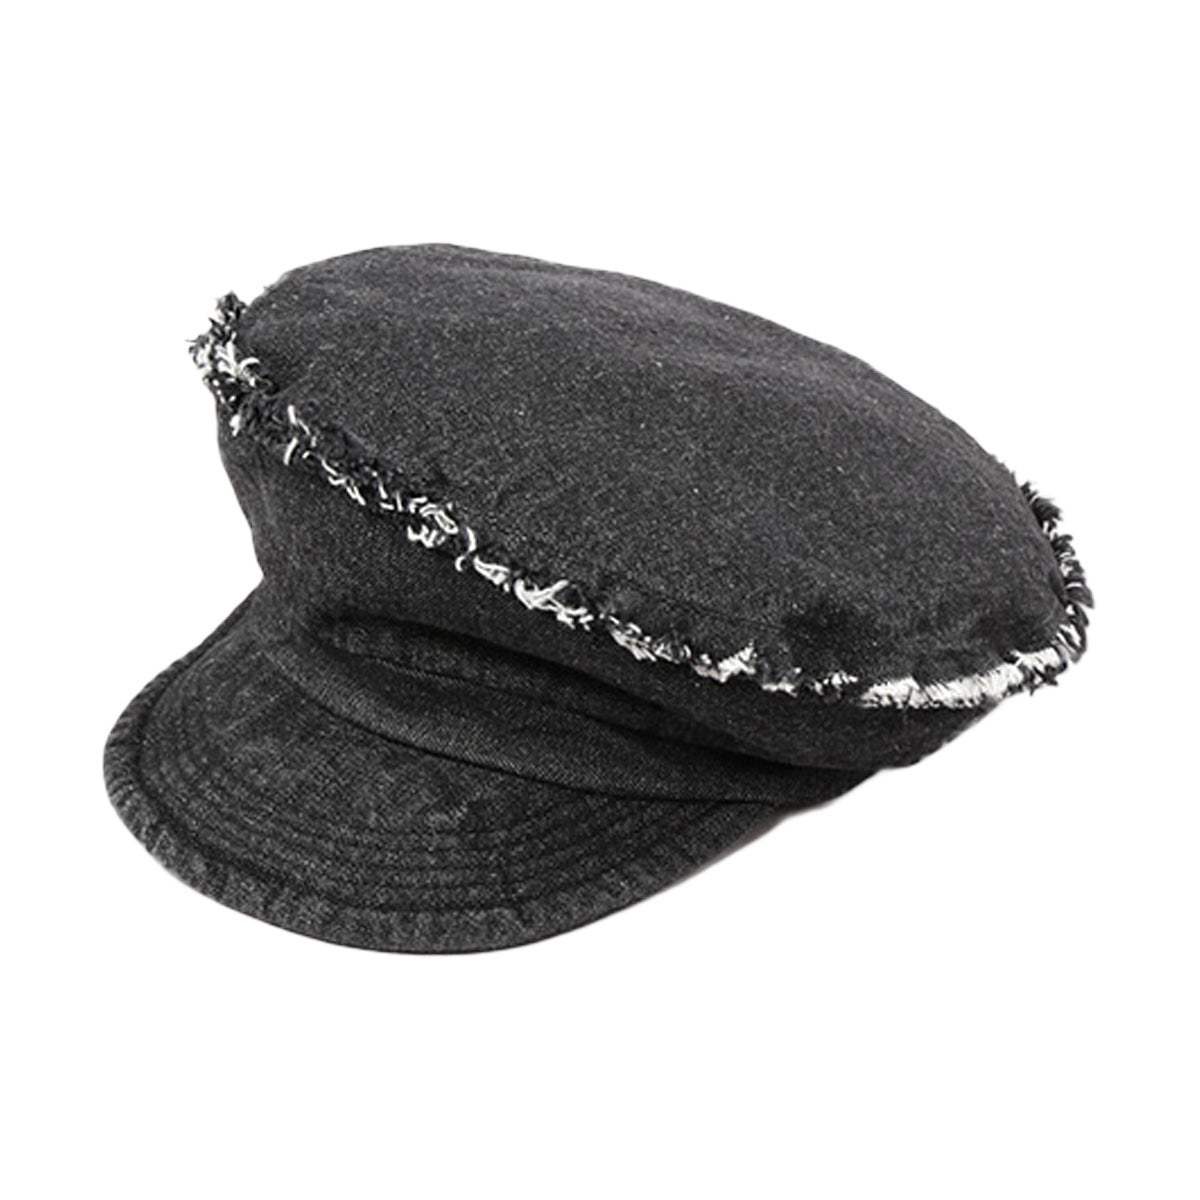 Dean Hat, Black